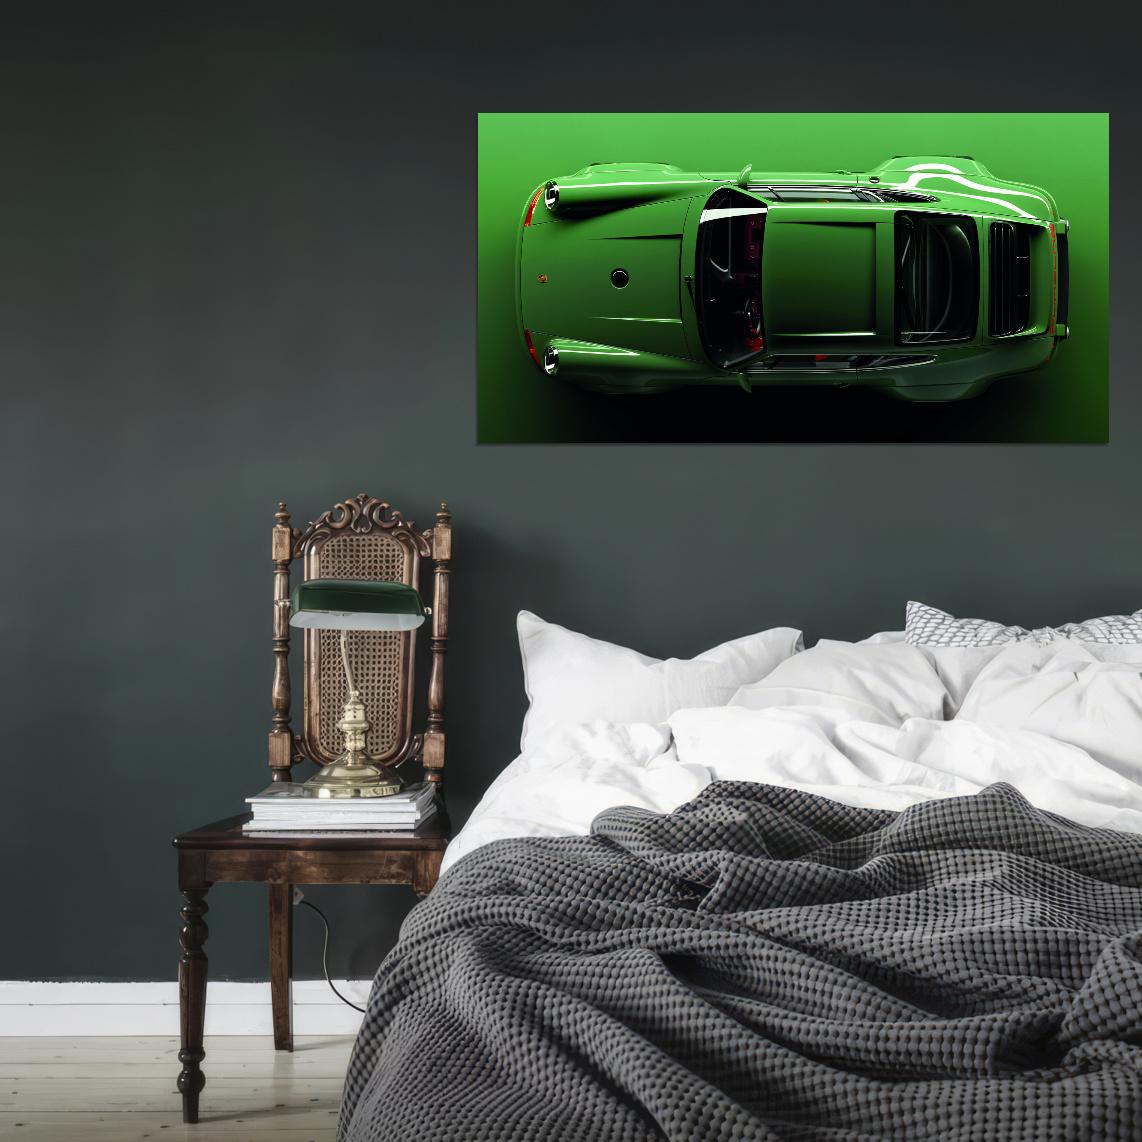 Green Porshe 911 Turbo Old Sportcar Car Poster